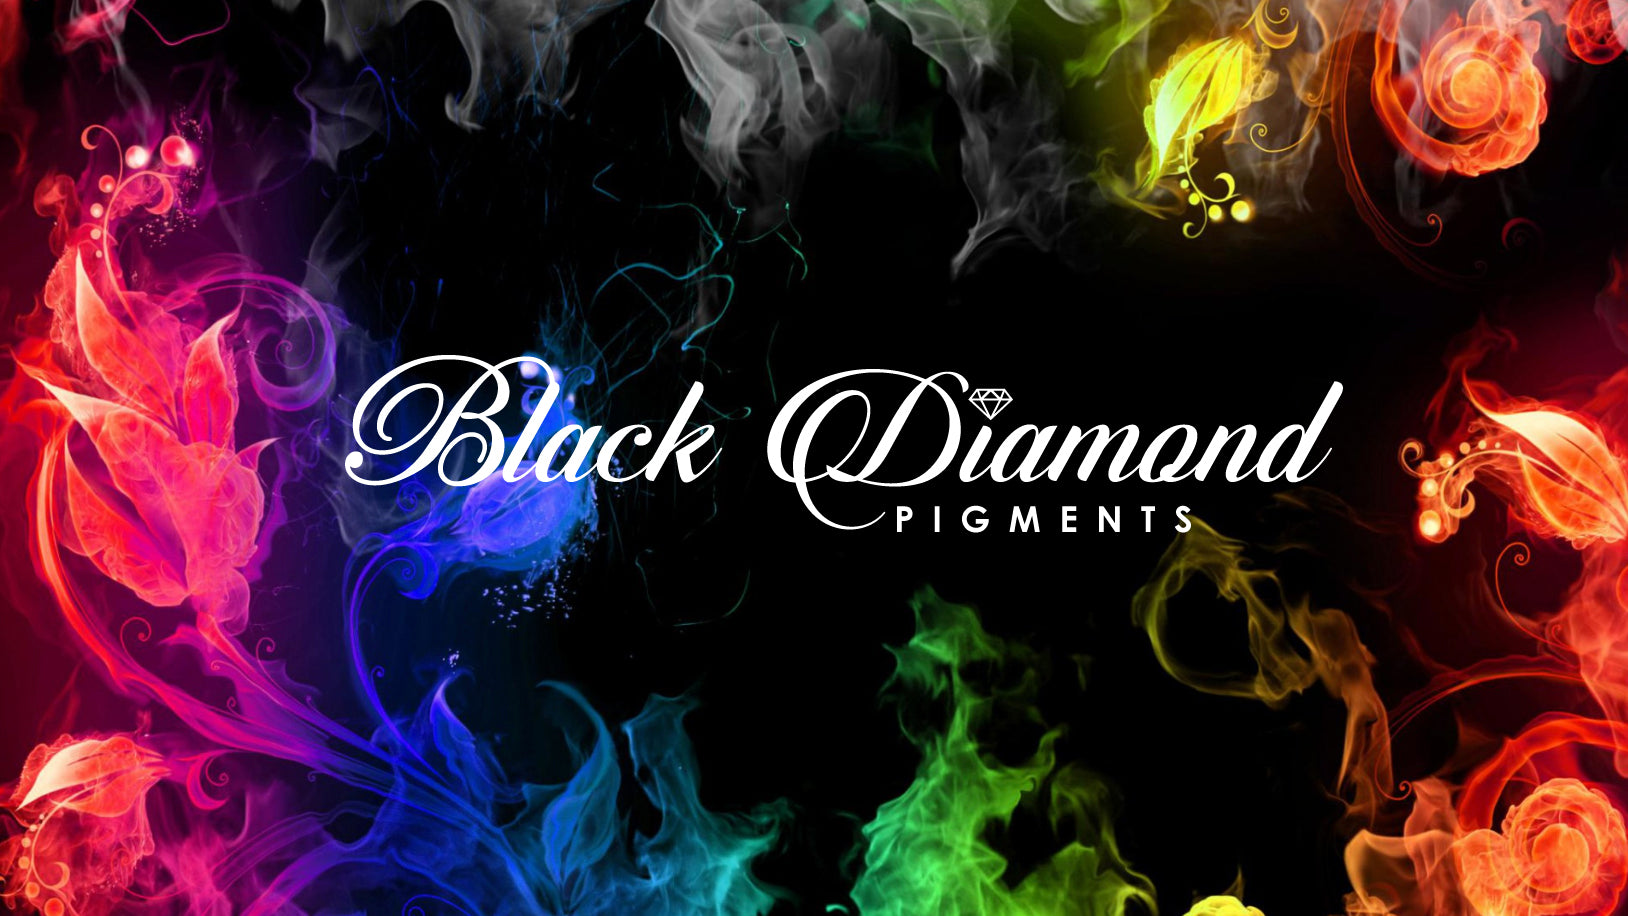 Black Diamond Pigments Holiday Gift Card Black Diamond Pigments